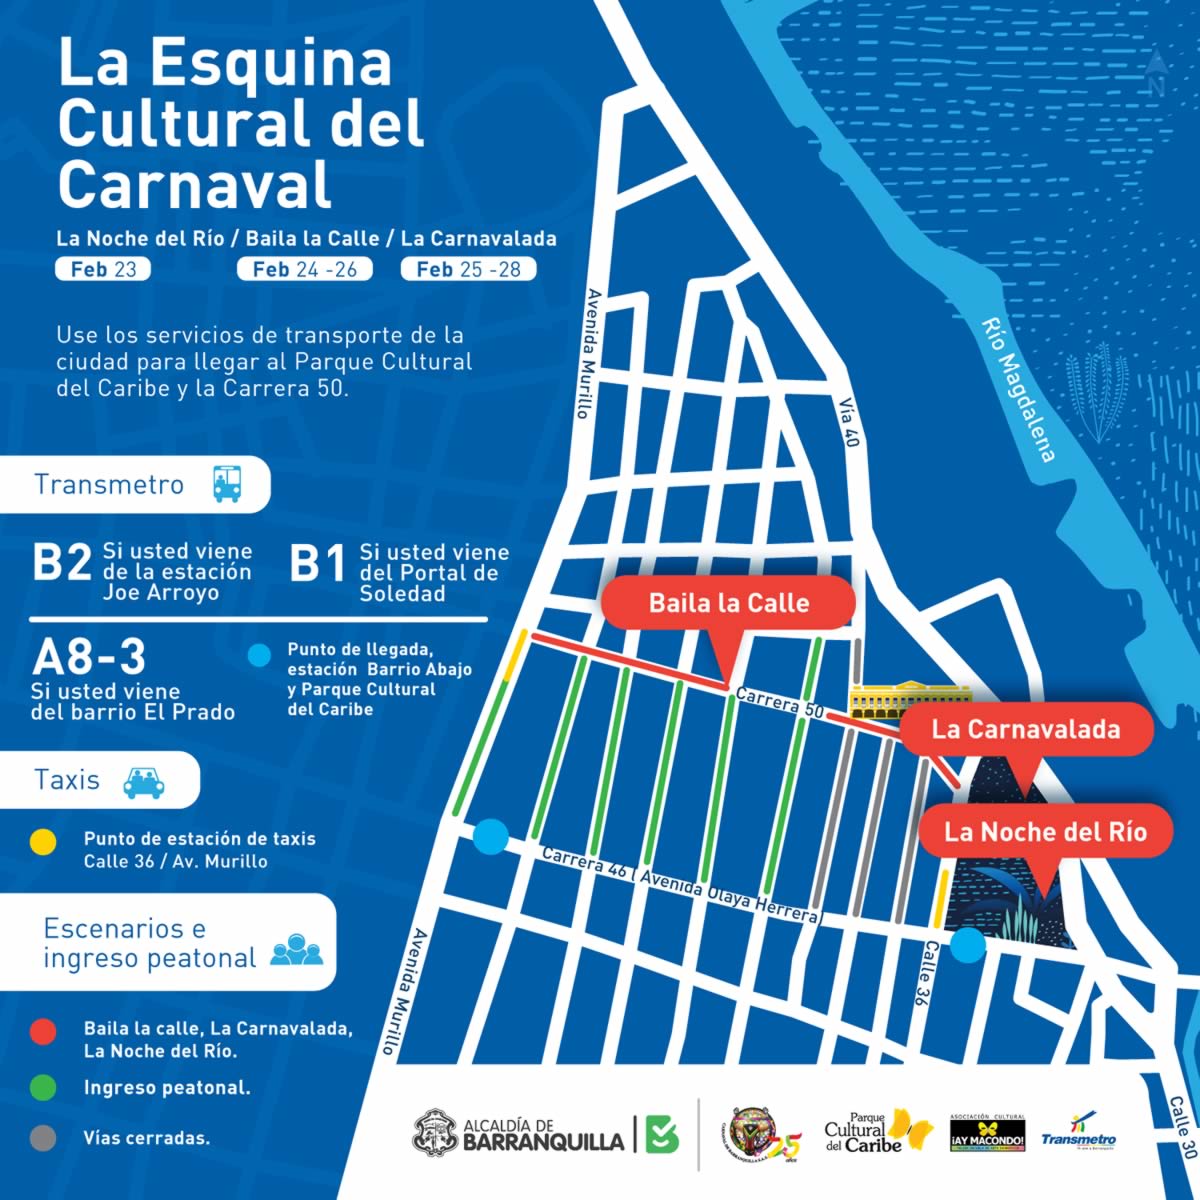 El Parque Cultural del Caribe y la Carrera 50, listos para ser la Esquina Cultural del Carnaval